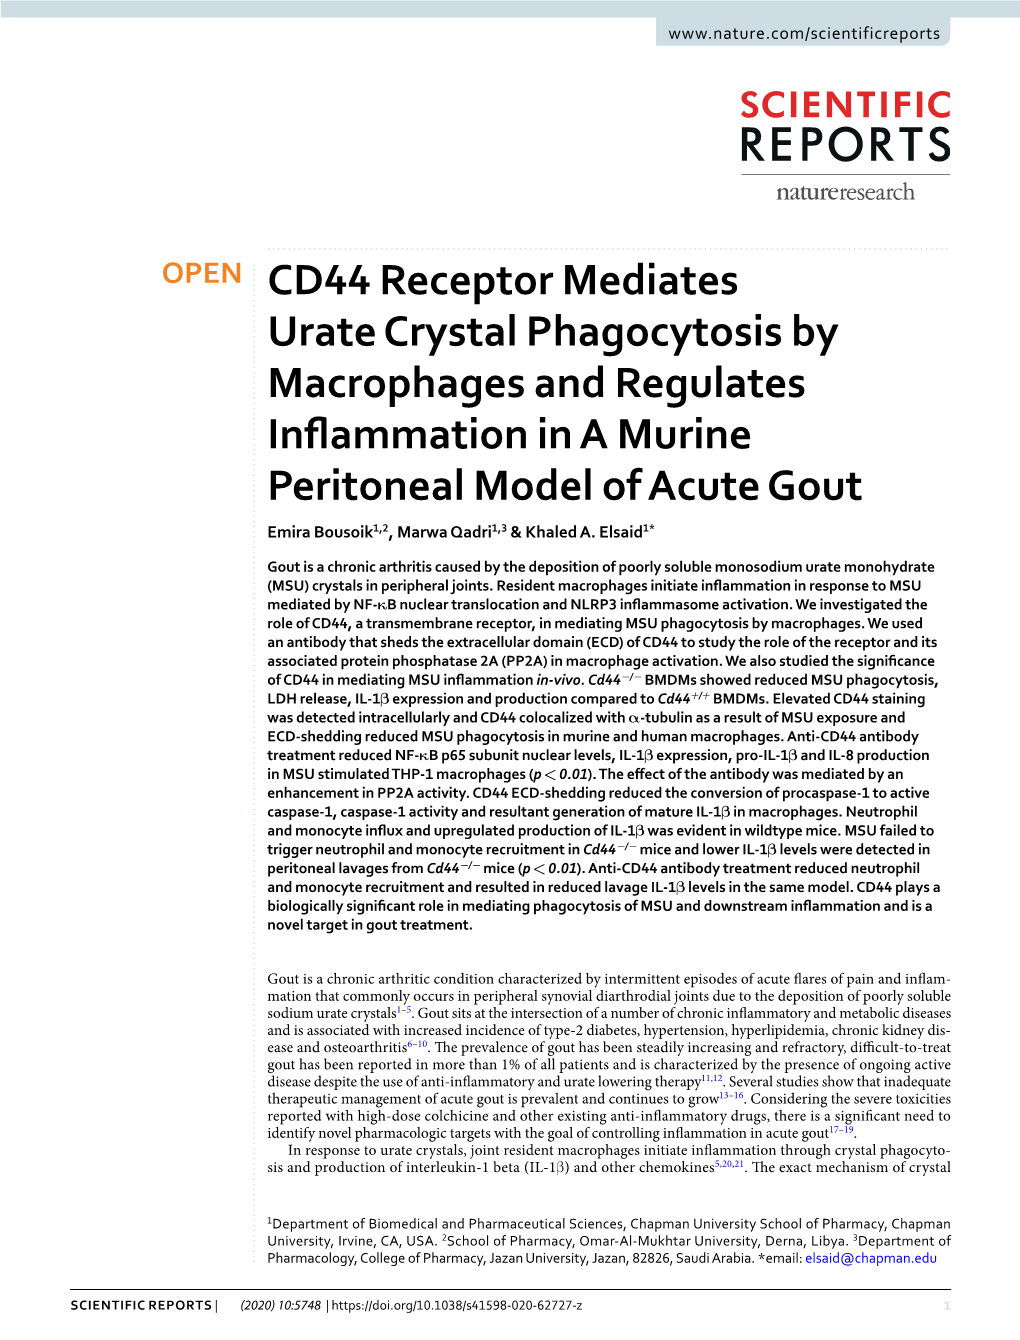 CD44 Receptor Mediates Urate Crystal Phagocytosis By